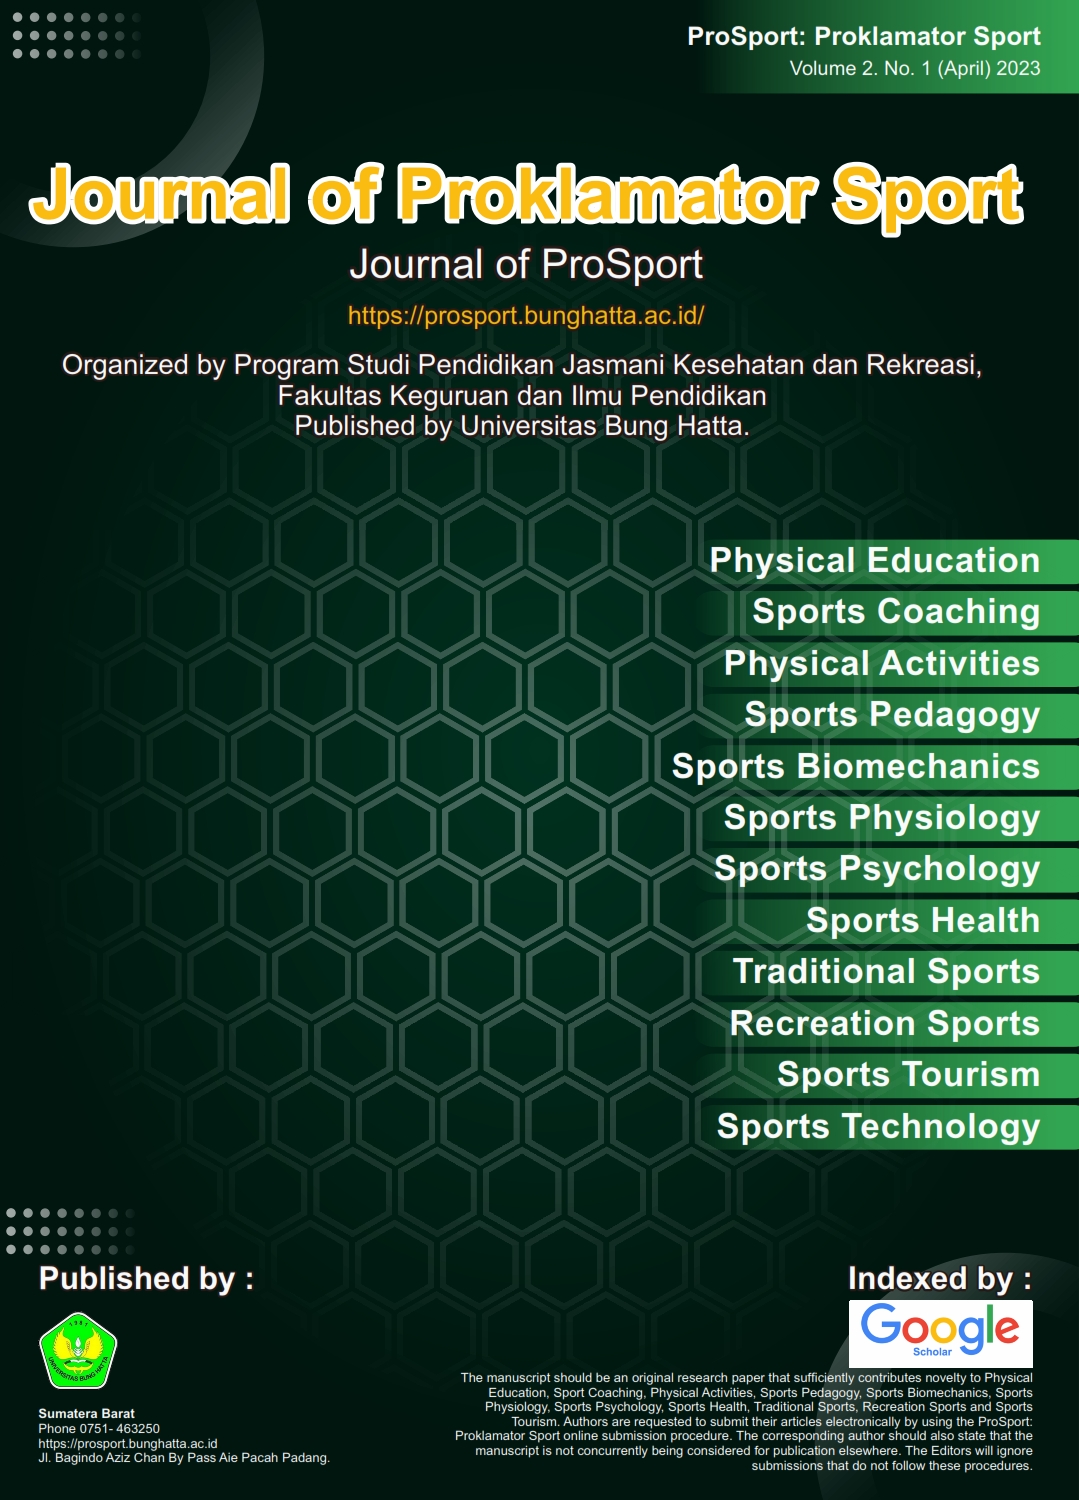 ProSport : Proklamator Sport, Vol 2 No 1, April (20230